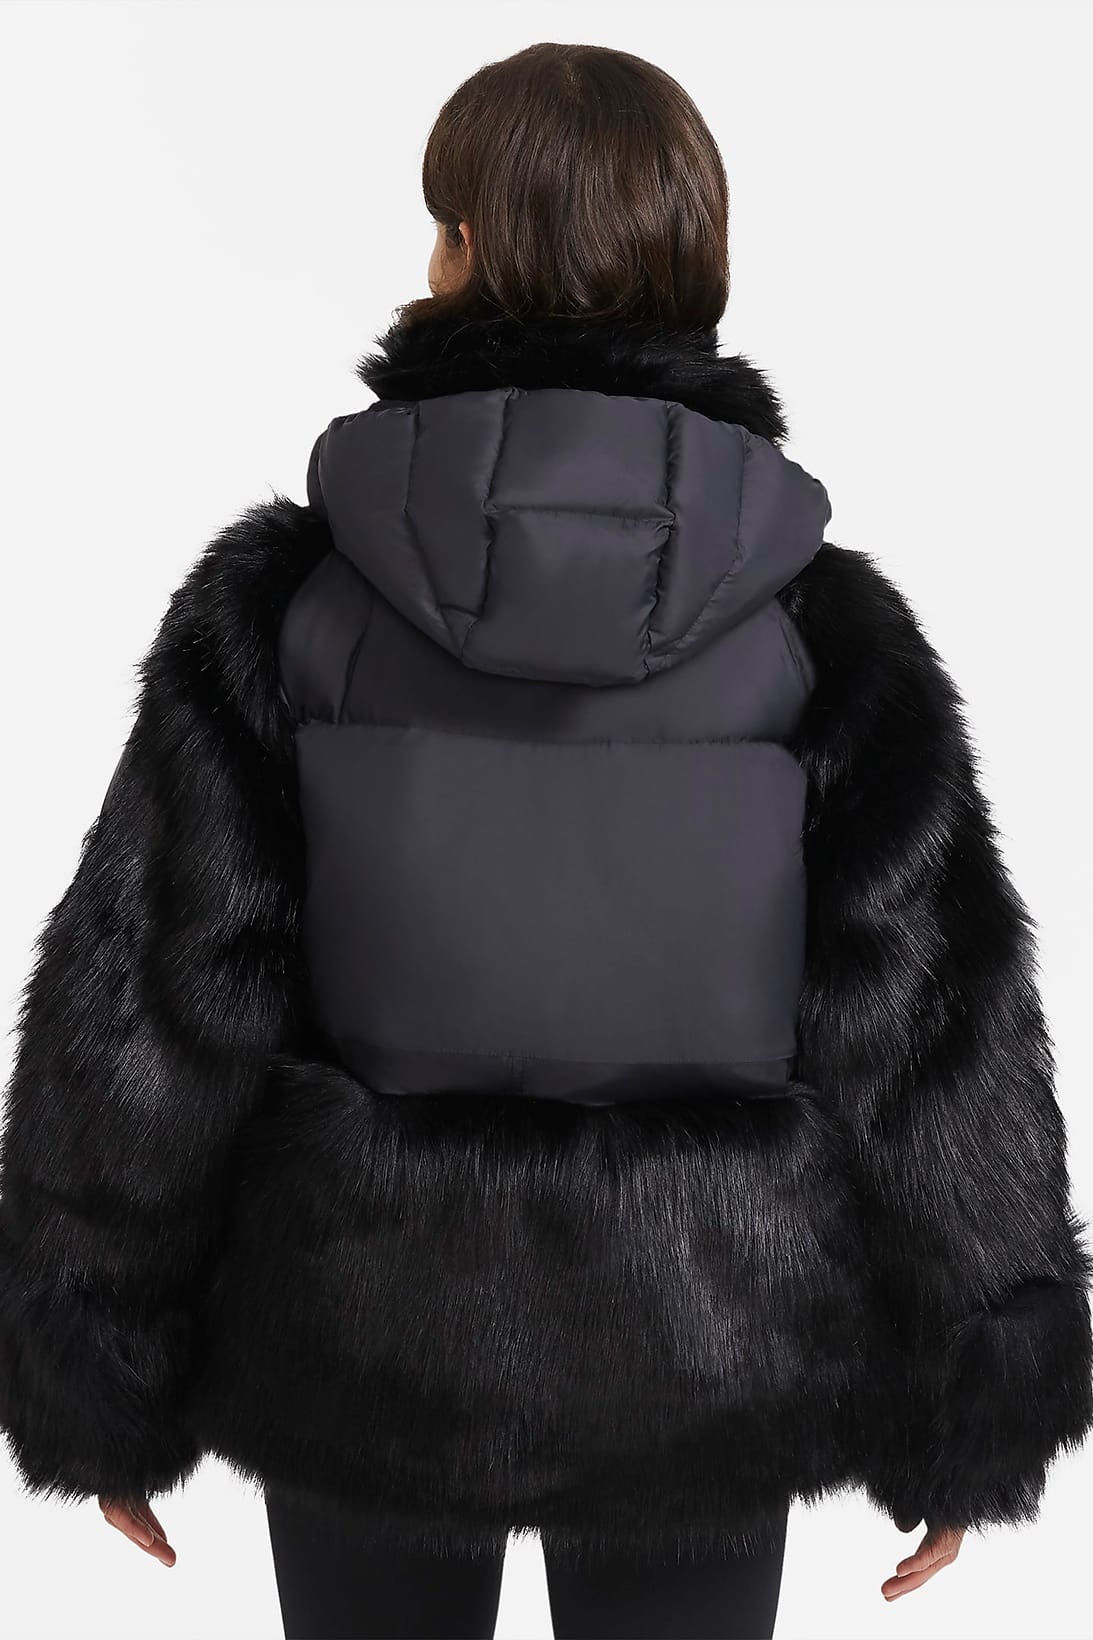 nike jacket with fur hood